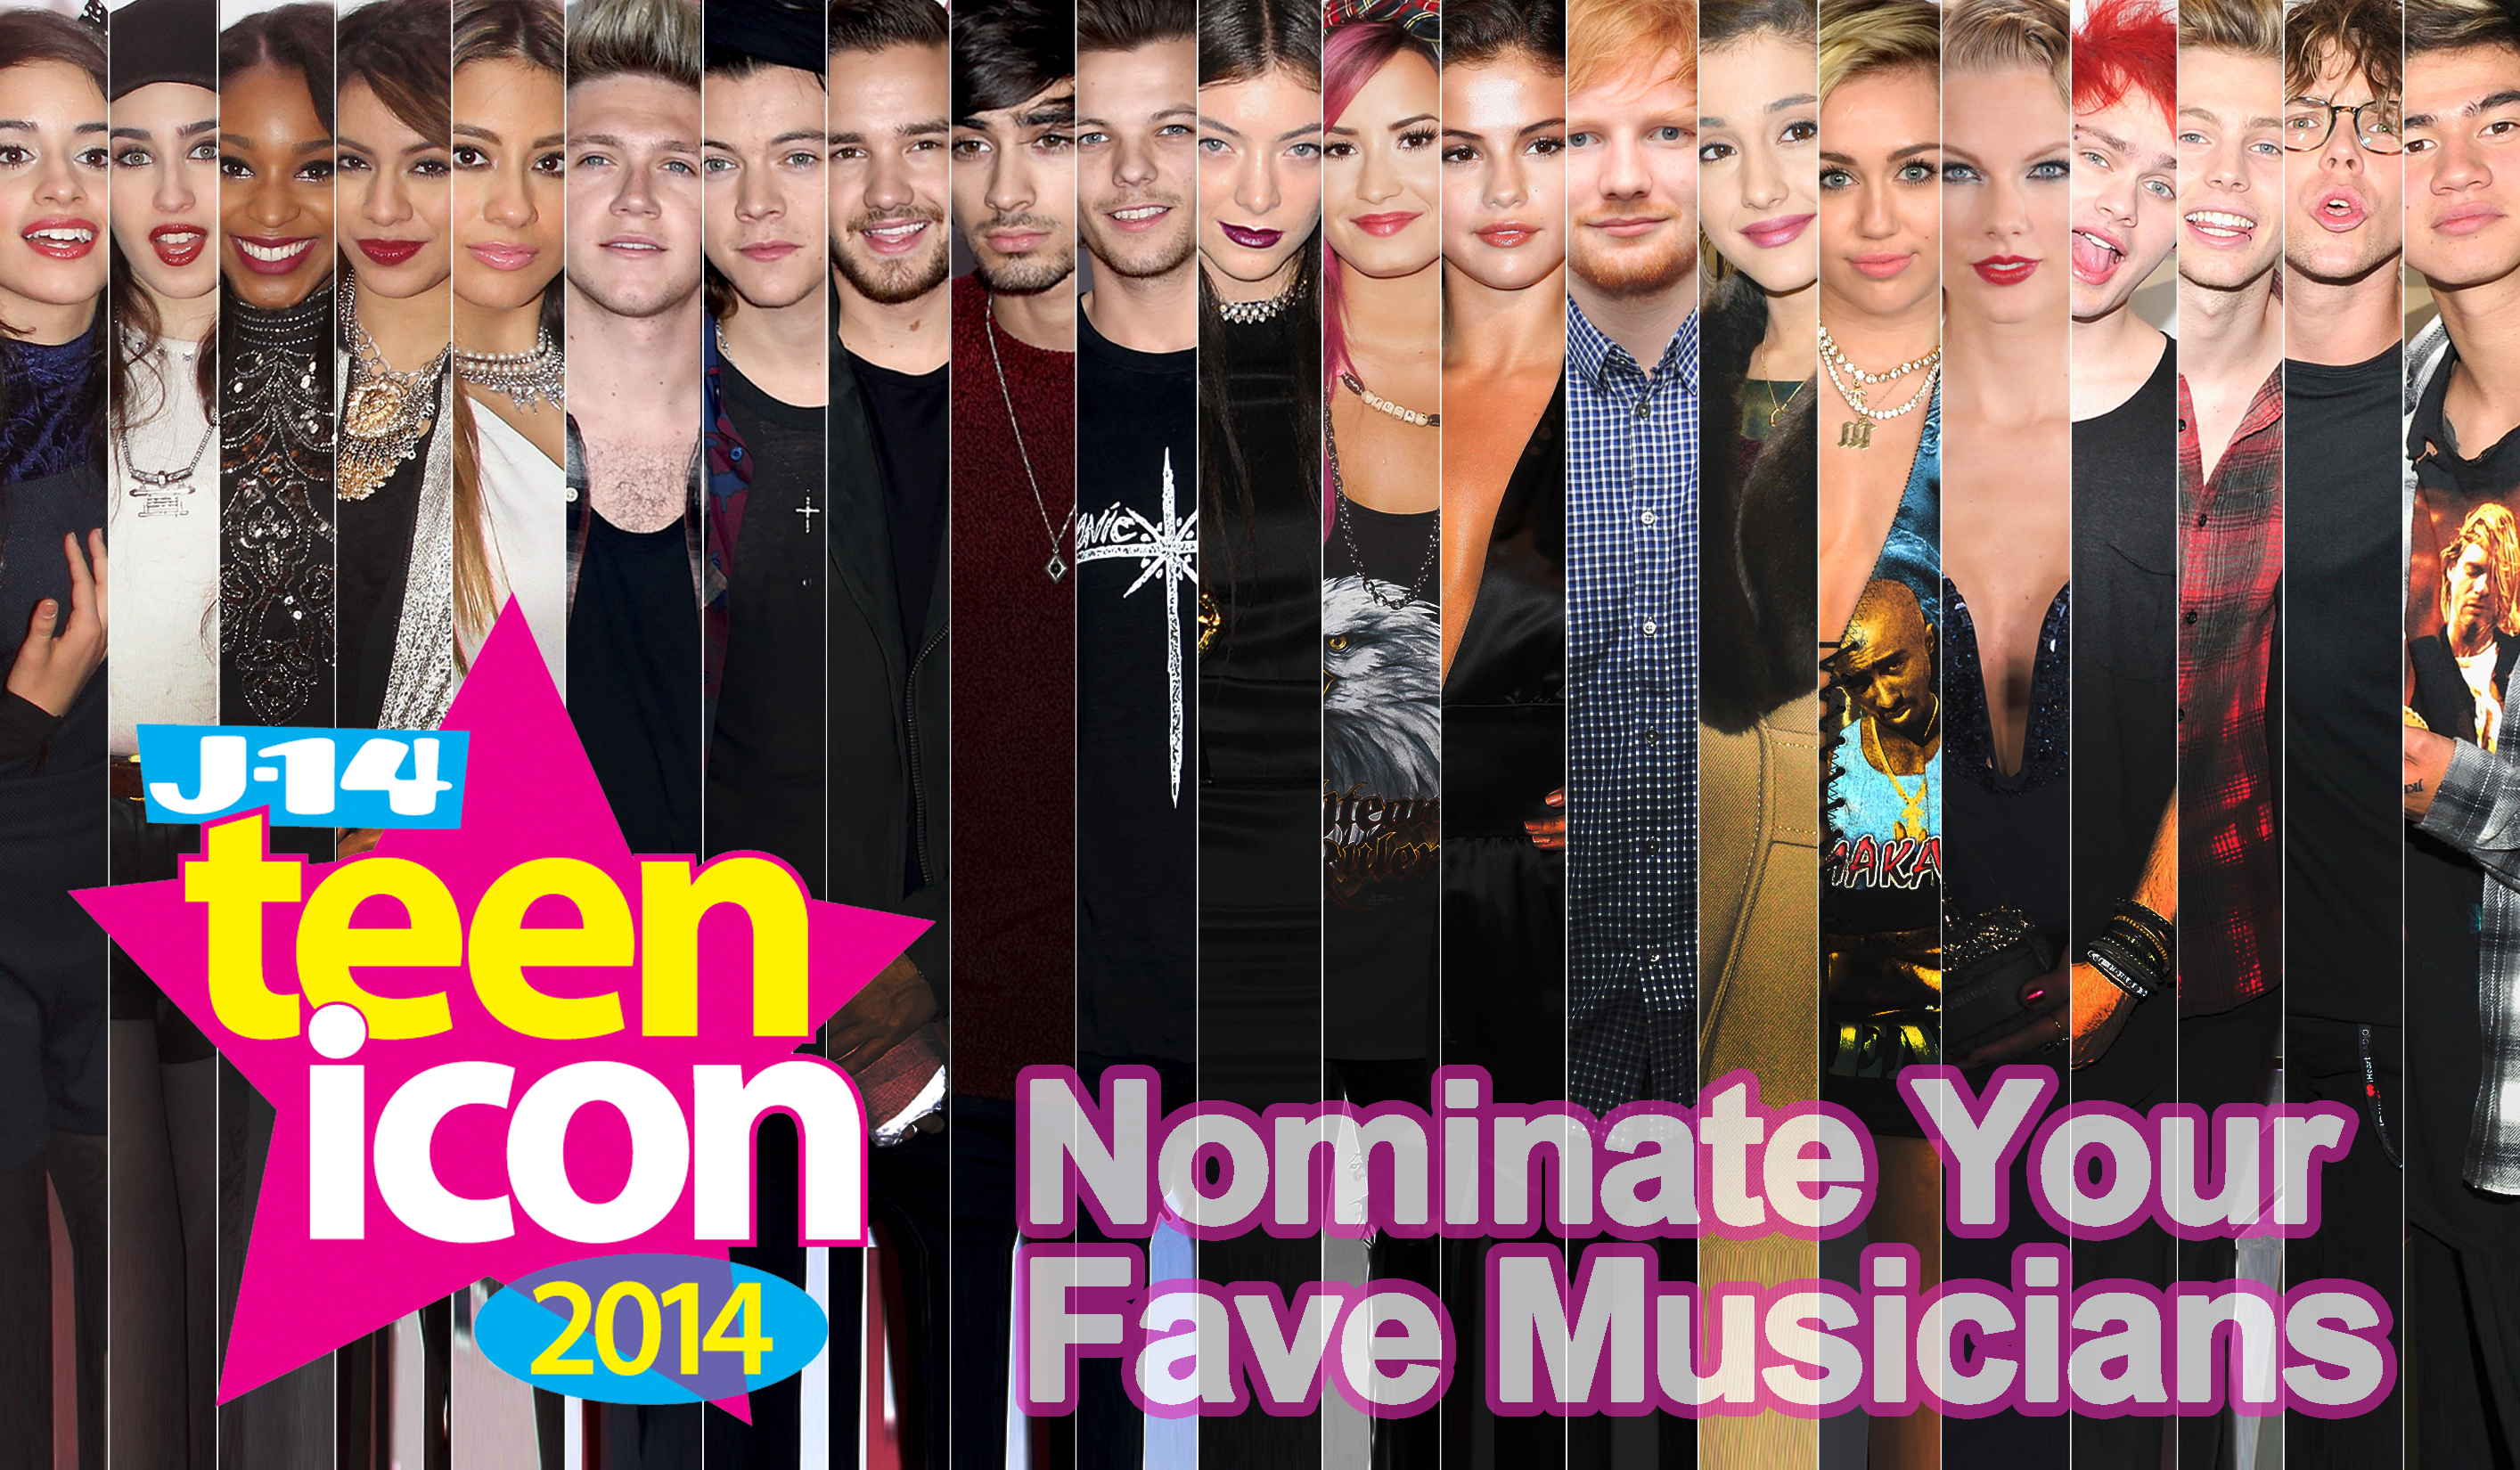 J 14 teen icon awards 2014 nominations